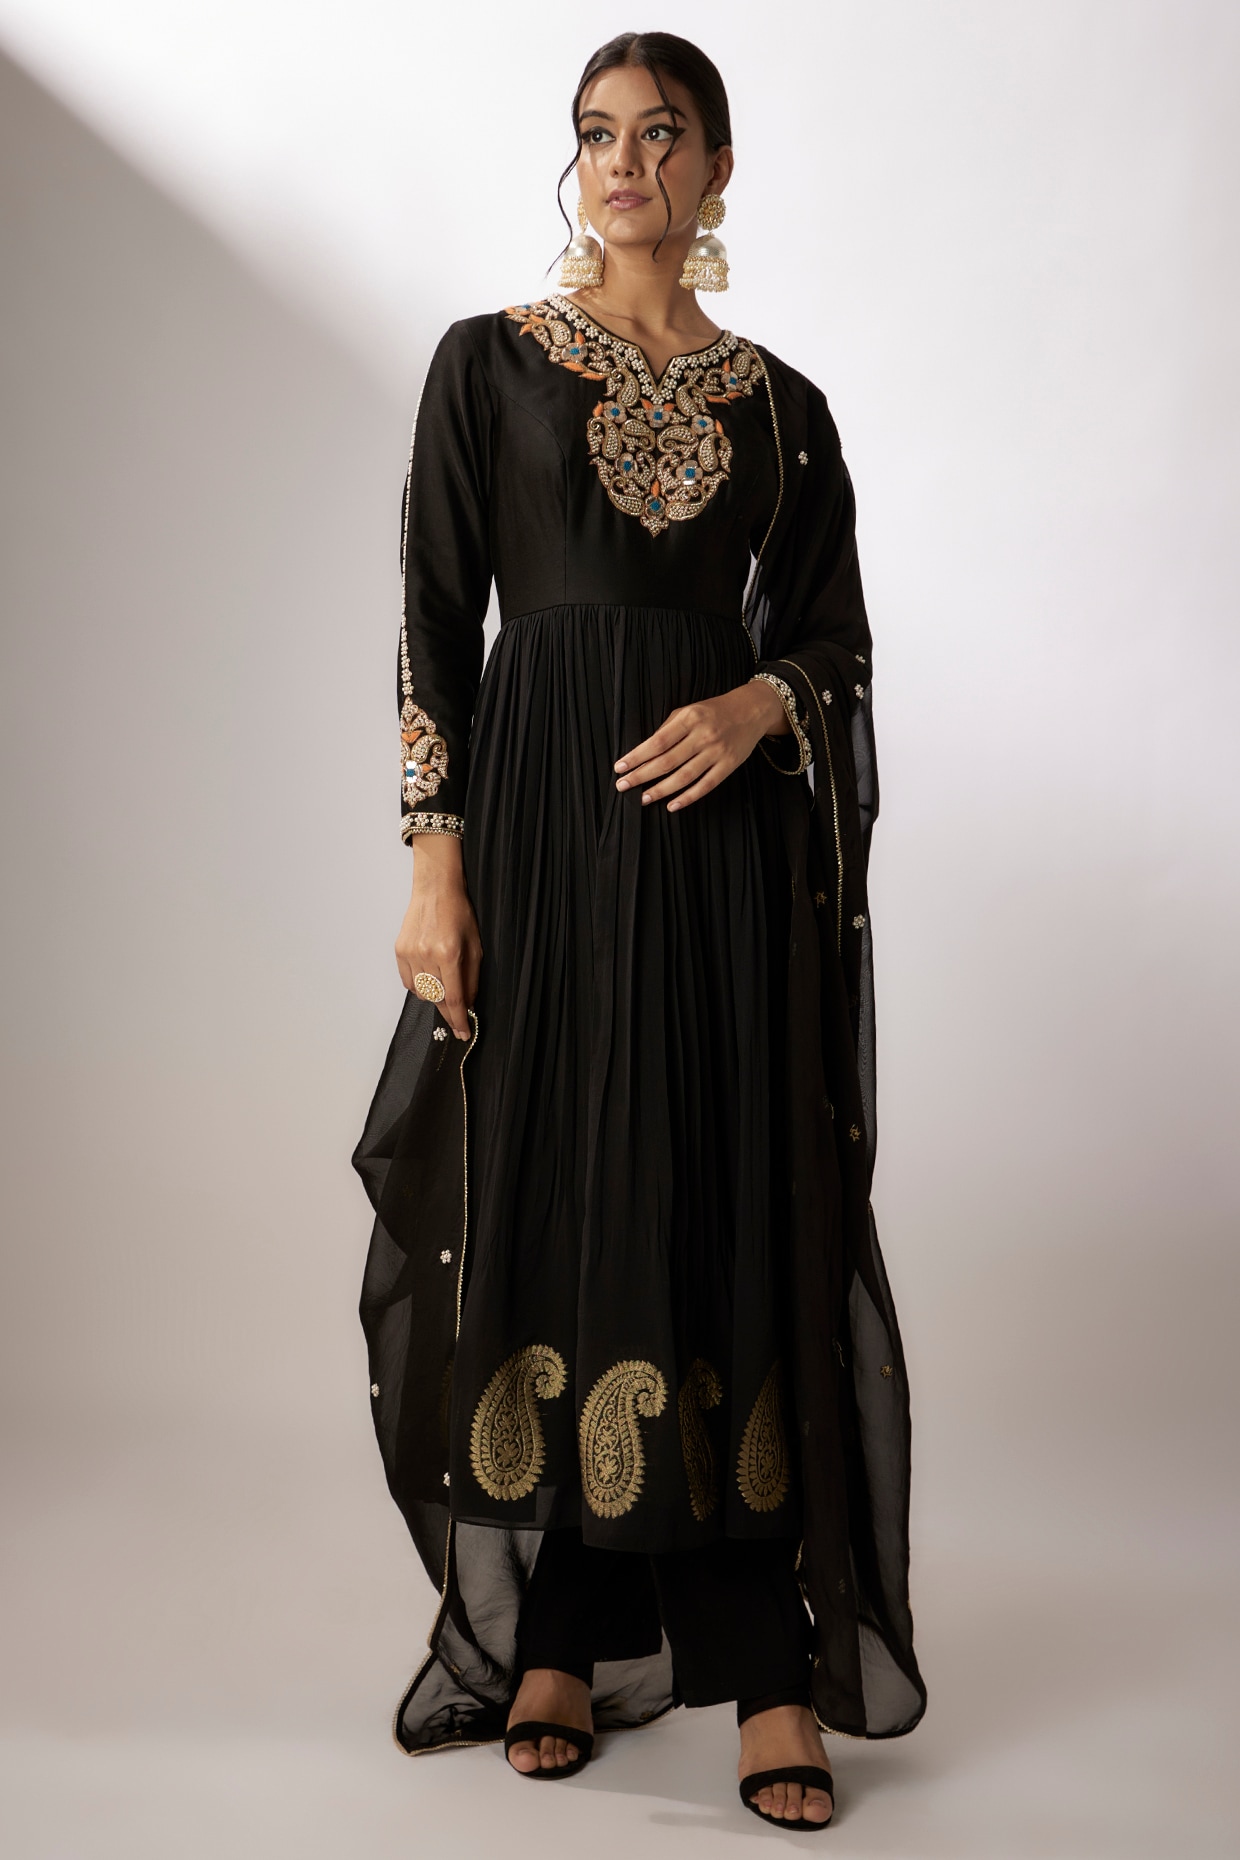 Buy Party Wear Net Fabric Anarkali Suit in Black Color Online - SALV3505 |  Appelle Fashion